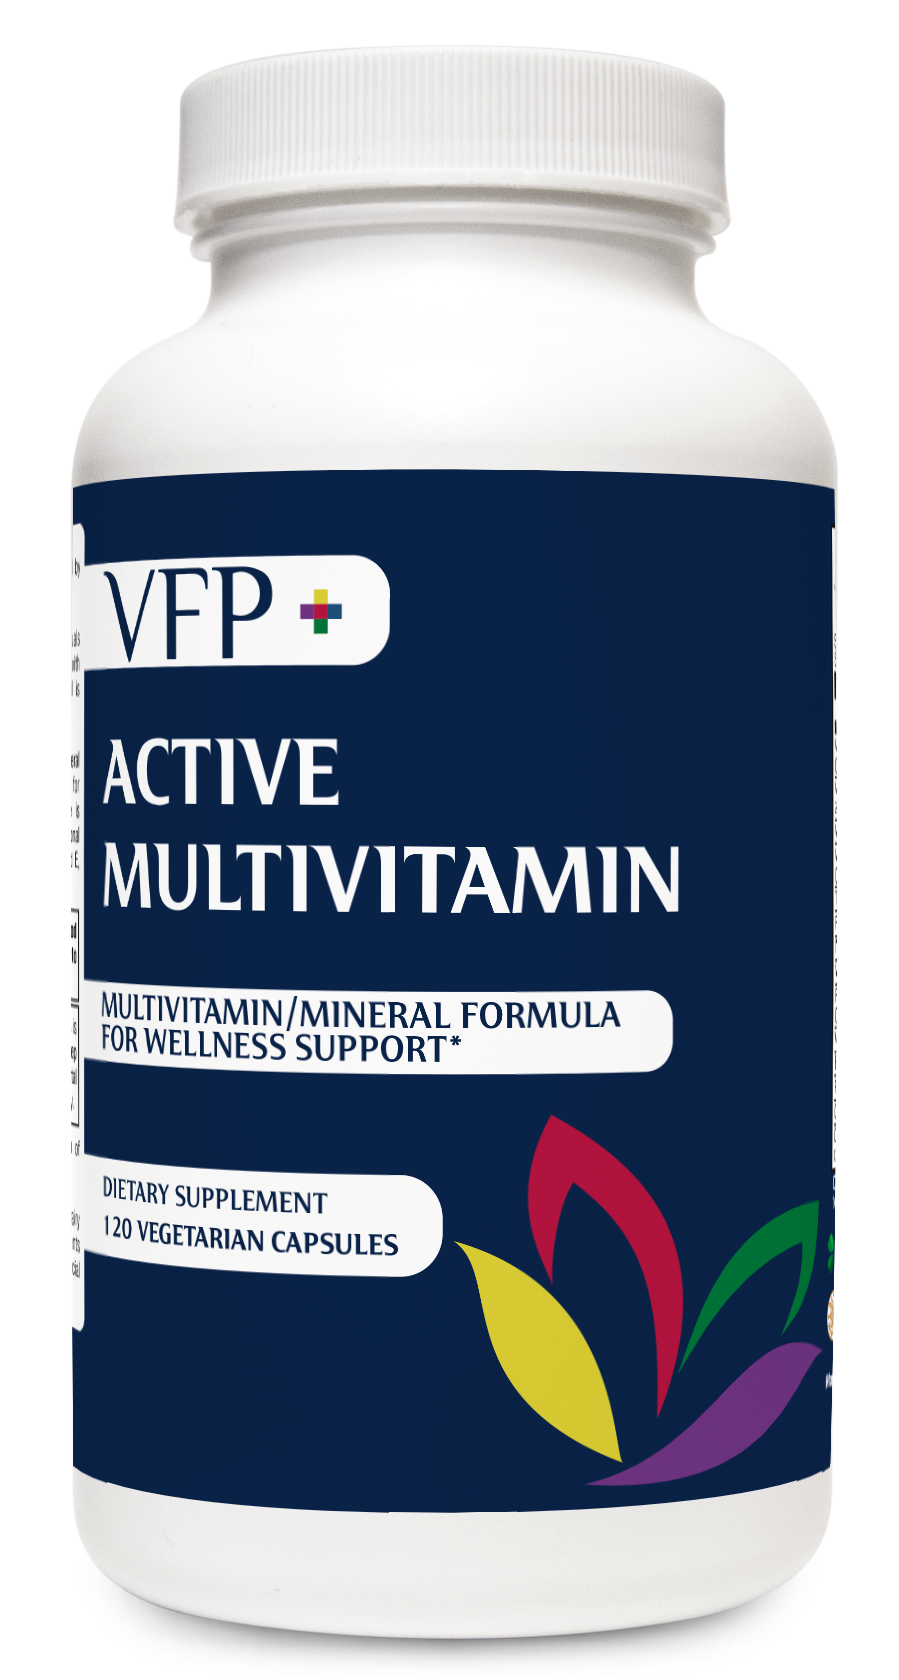 Active Multivitamin.